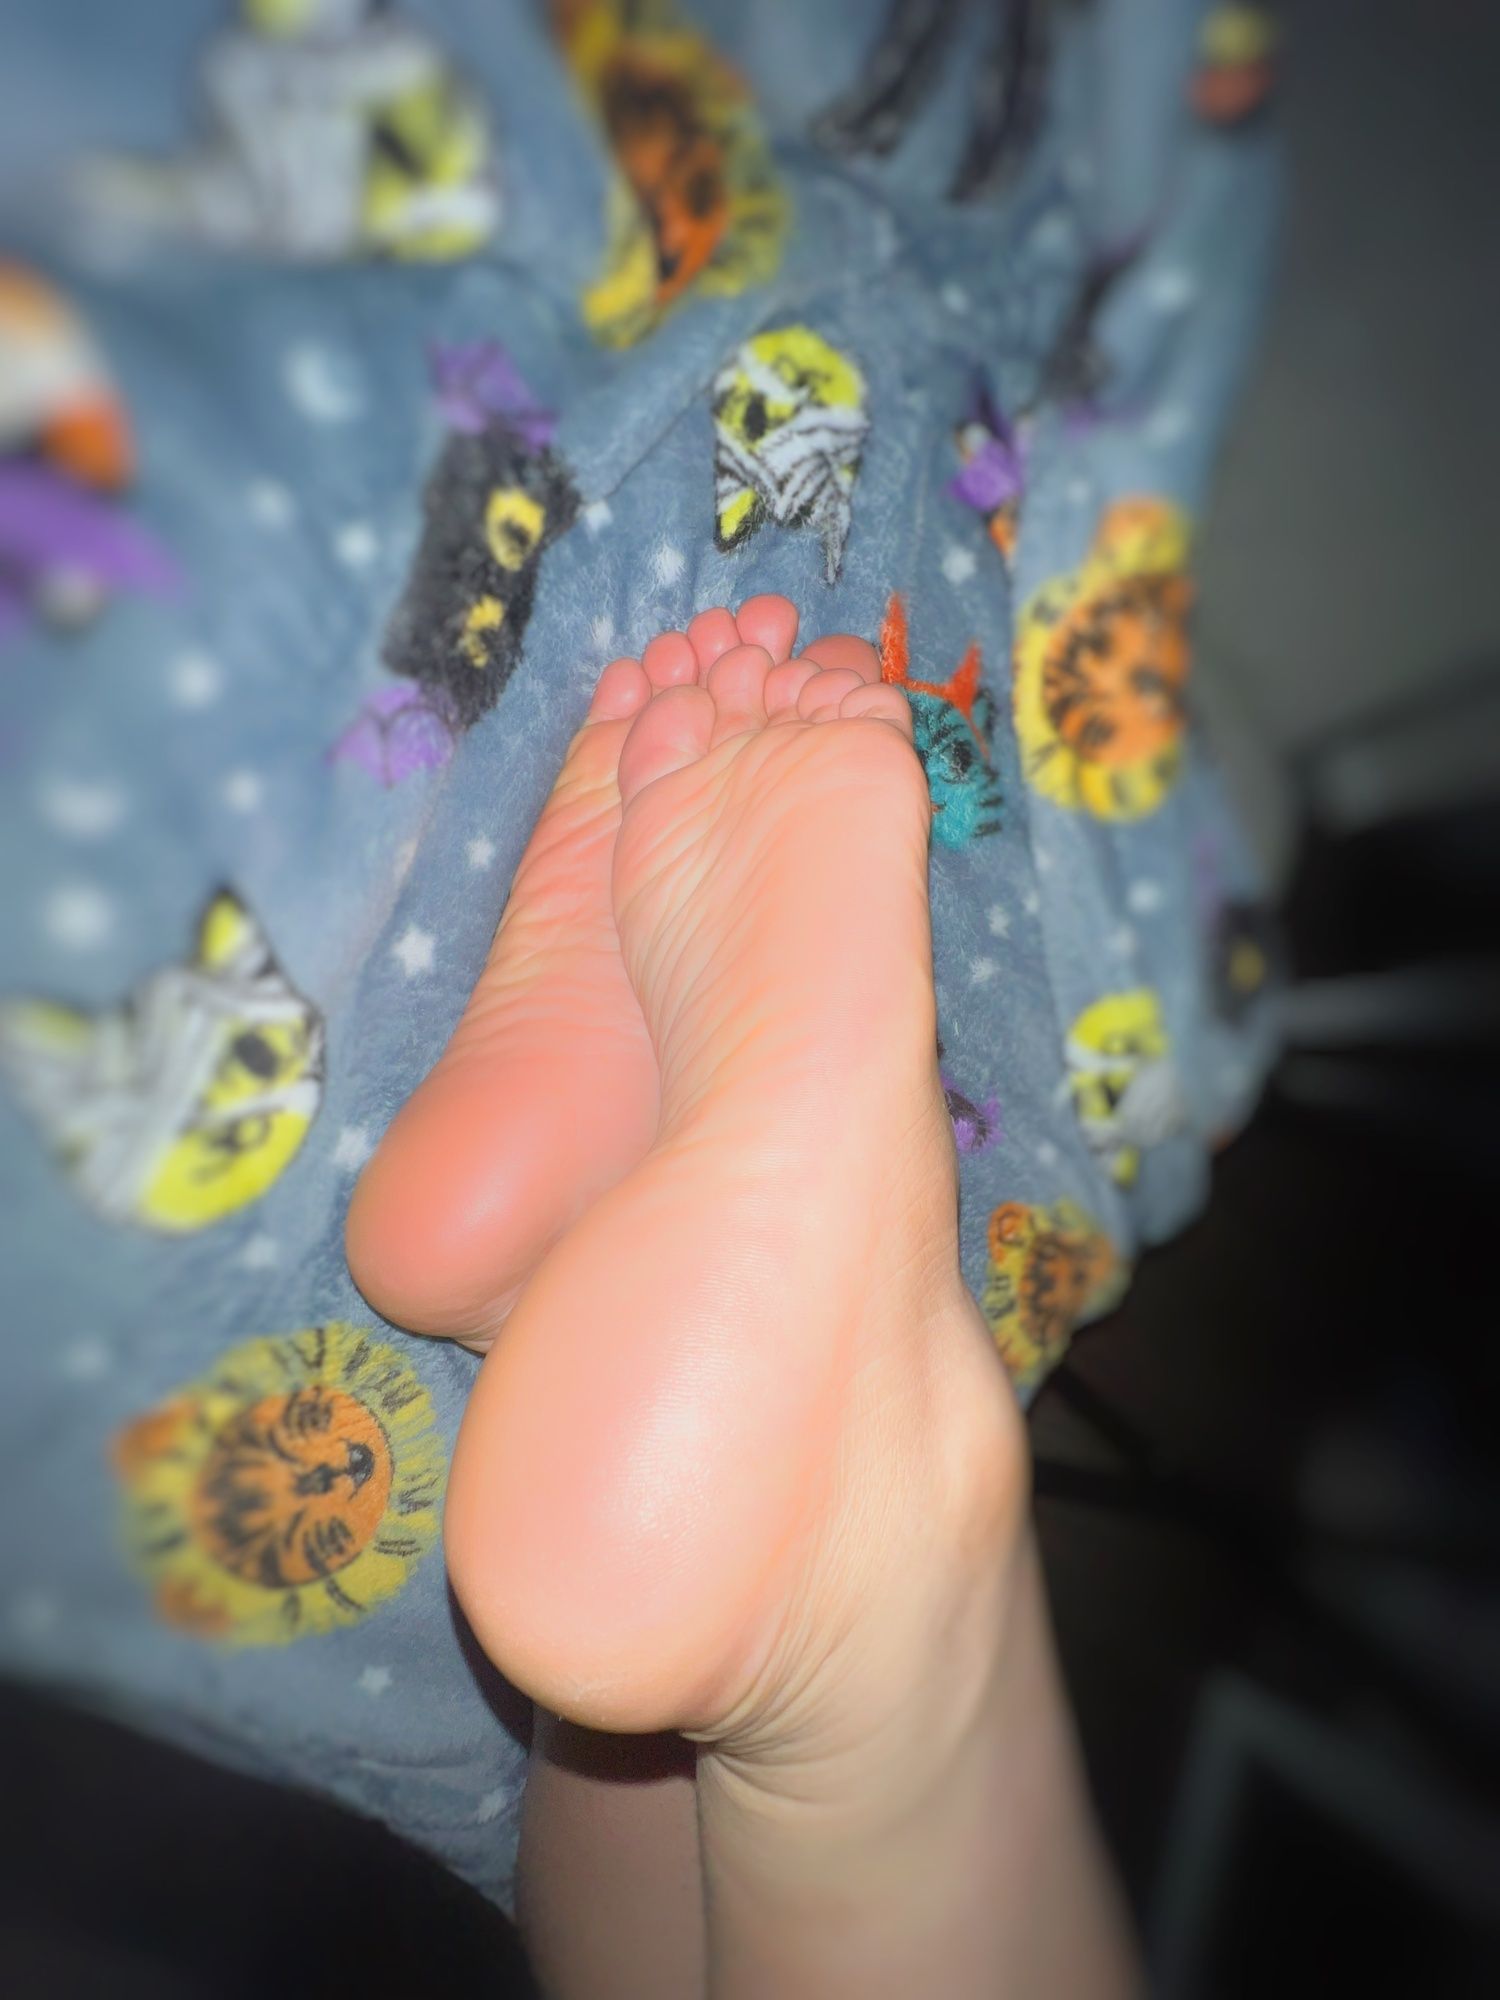 My Feet #19